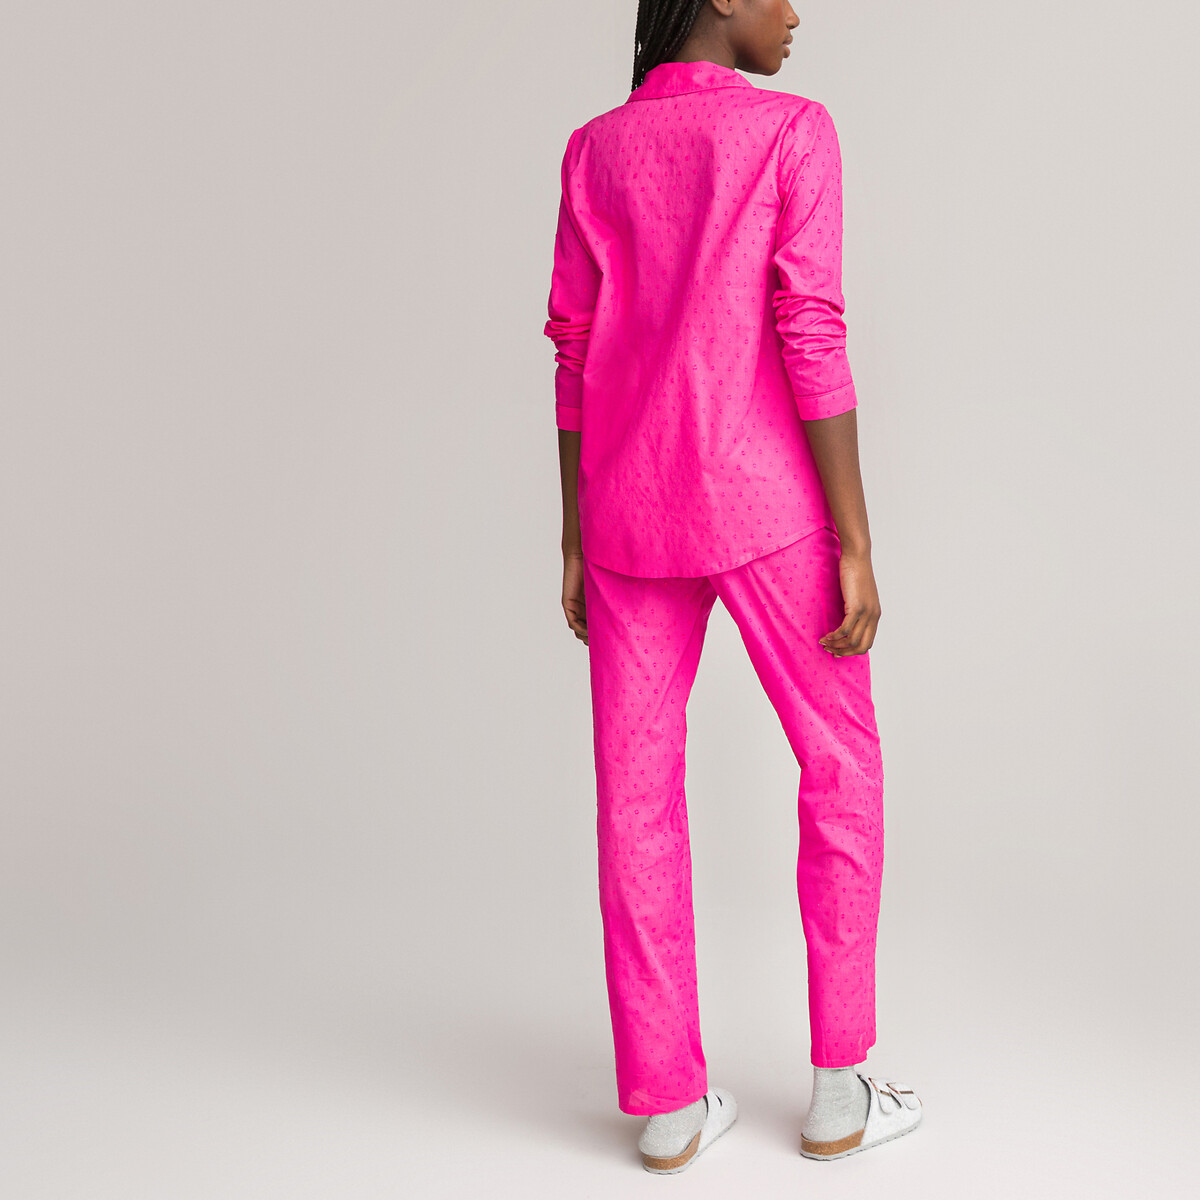 Пижама Из ткани с вышивкой гладью 100 хлопок 38 (FR) - 44 (RUS) розовый LaRedoute, размер 38 (FR) - 44 (RUS) Пижама Из ткани с вышивкой гладью 100 хлопок 38 (FR) - 44 (RUS) розовый - фото 4